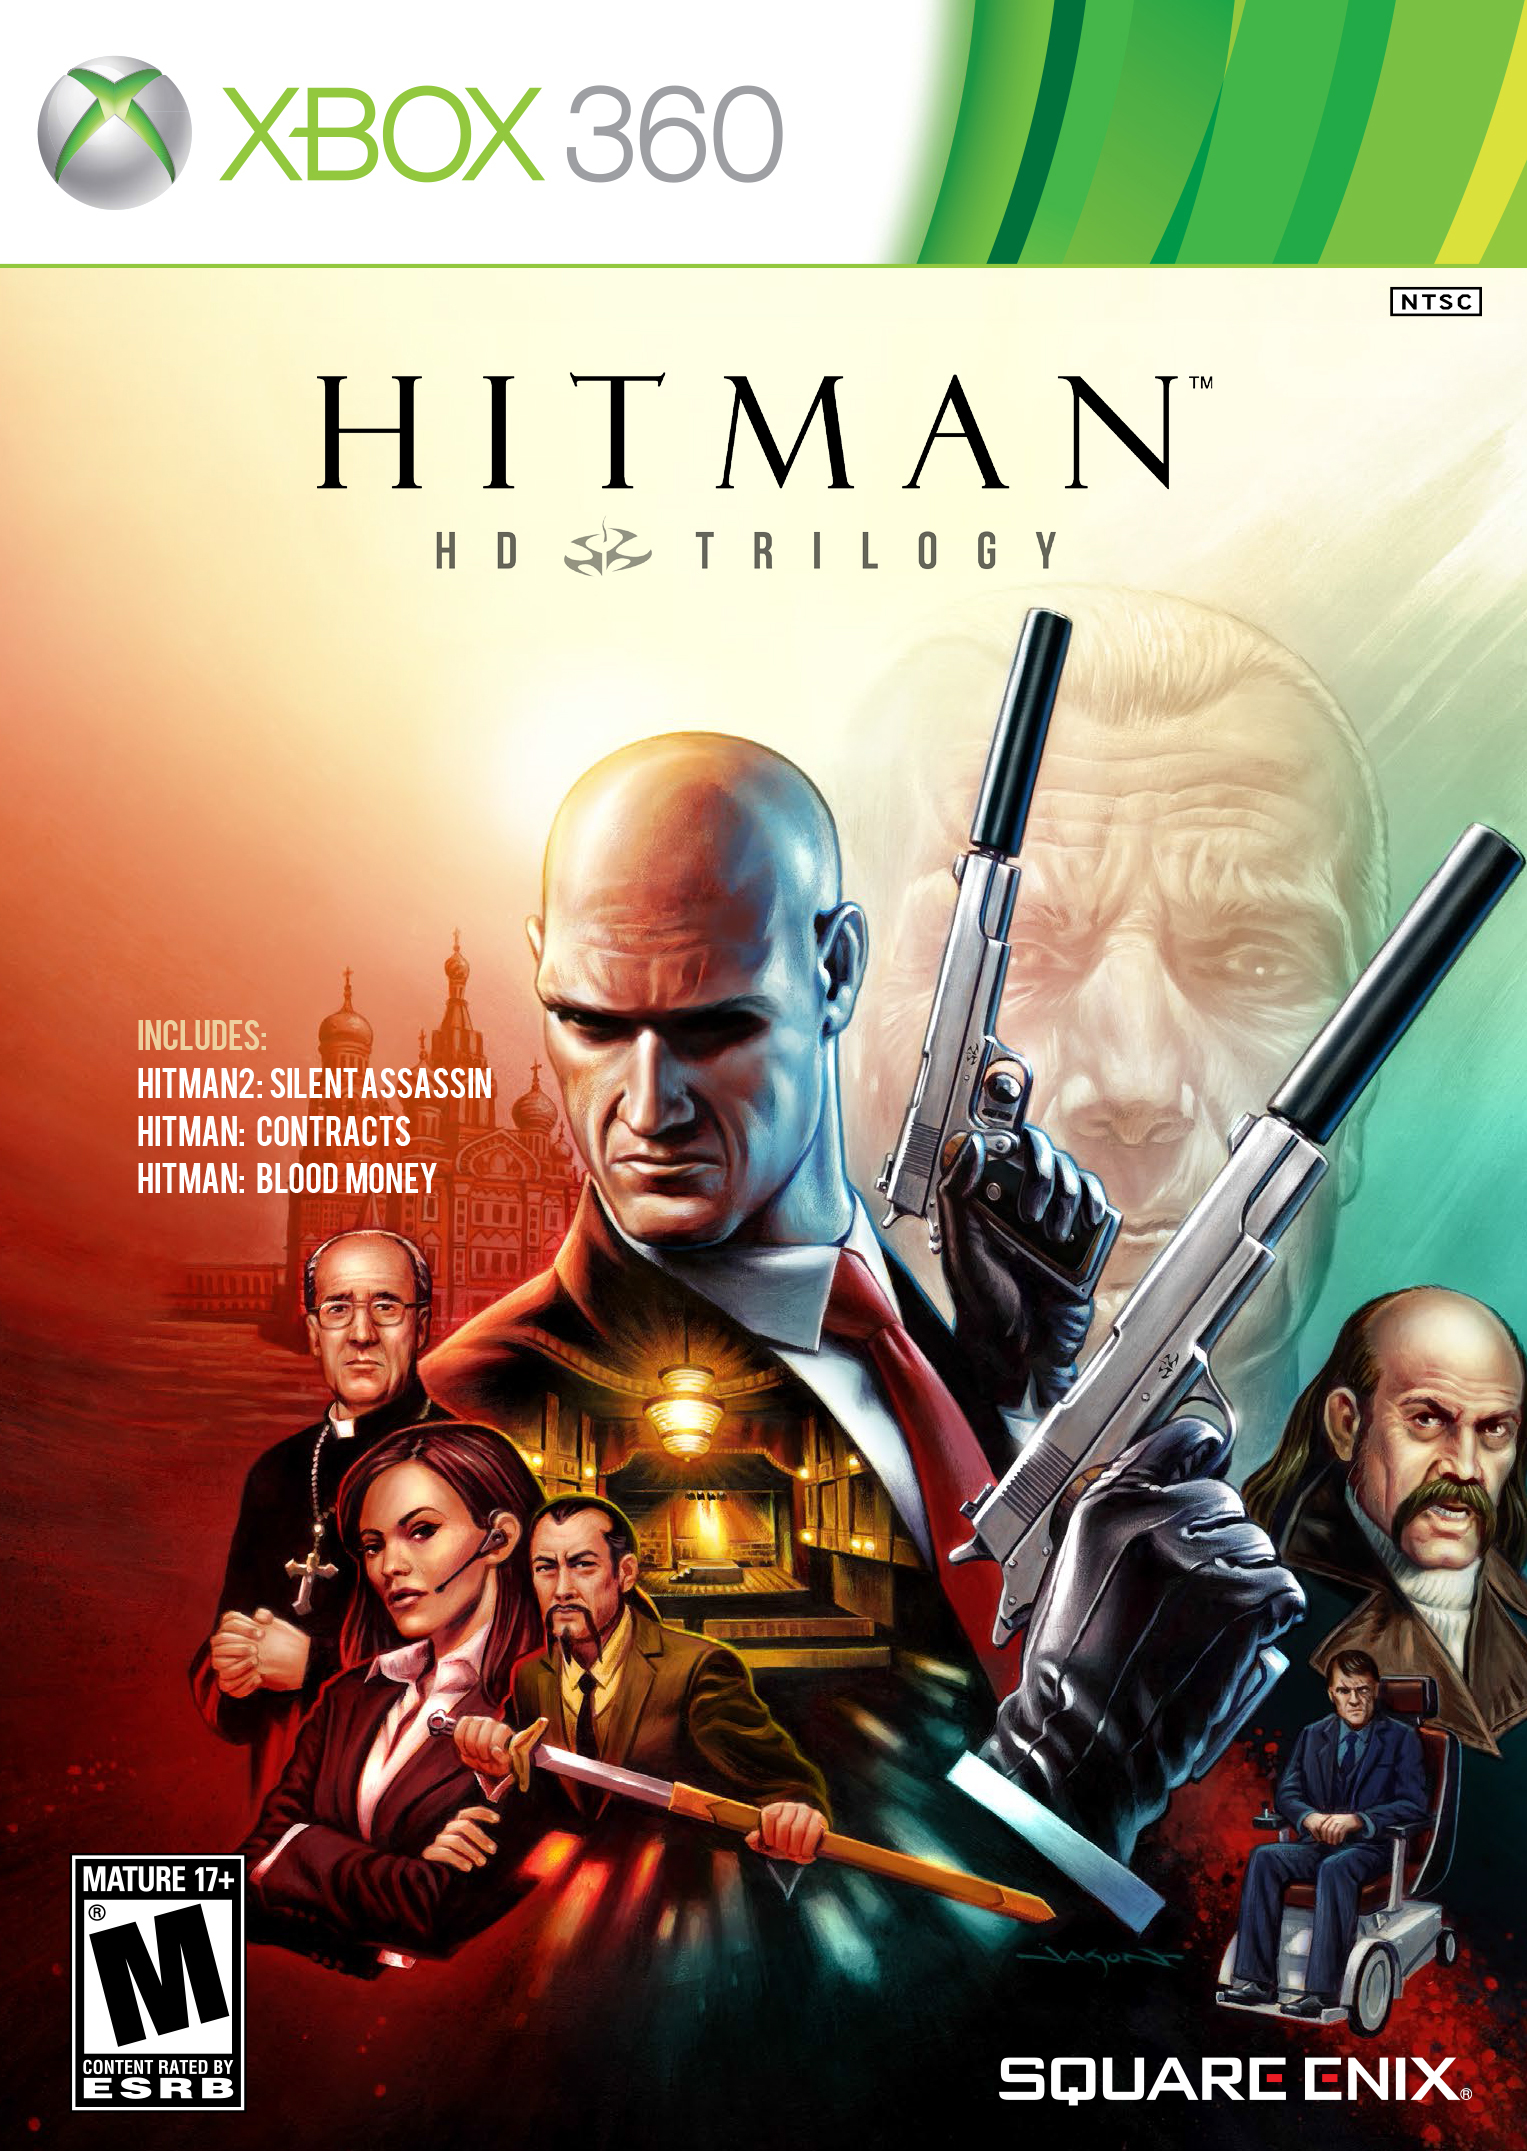 inkt poeder handelaar Hitman HD Trilogy | Hitman Wiki | Fandom